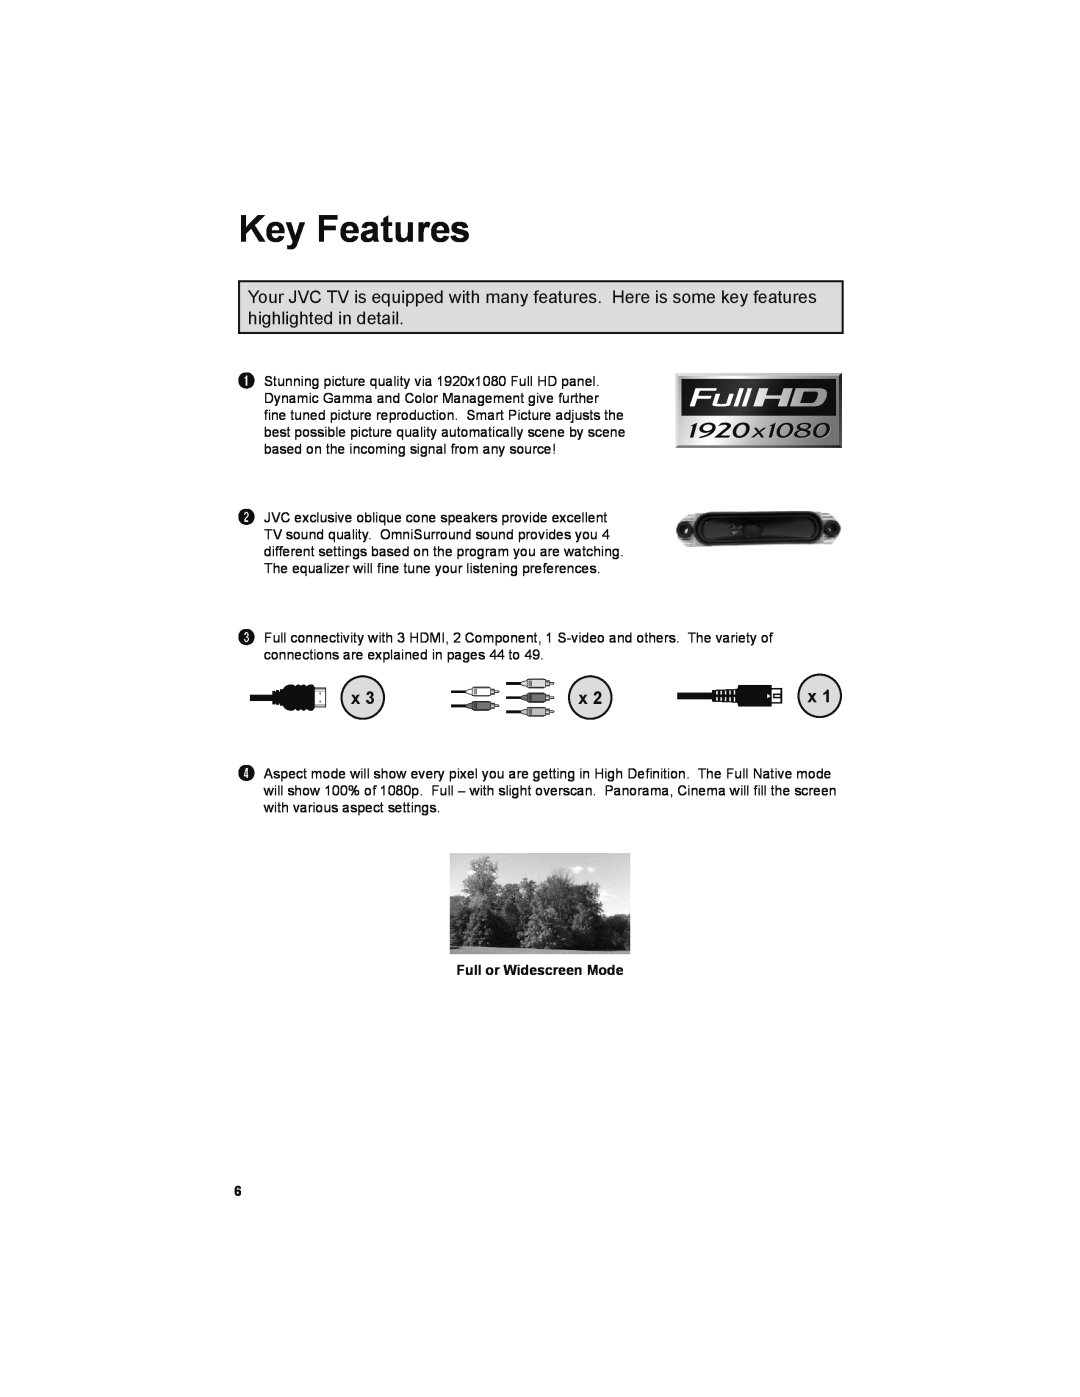 JVC LT-32JM30 manual Key Features, Full or Widescreen Mode 